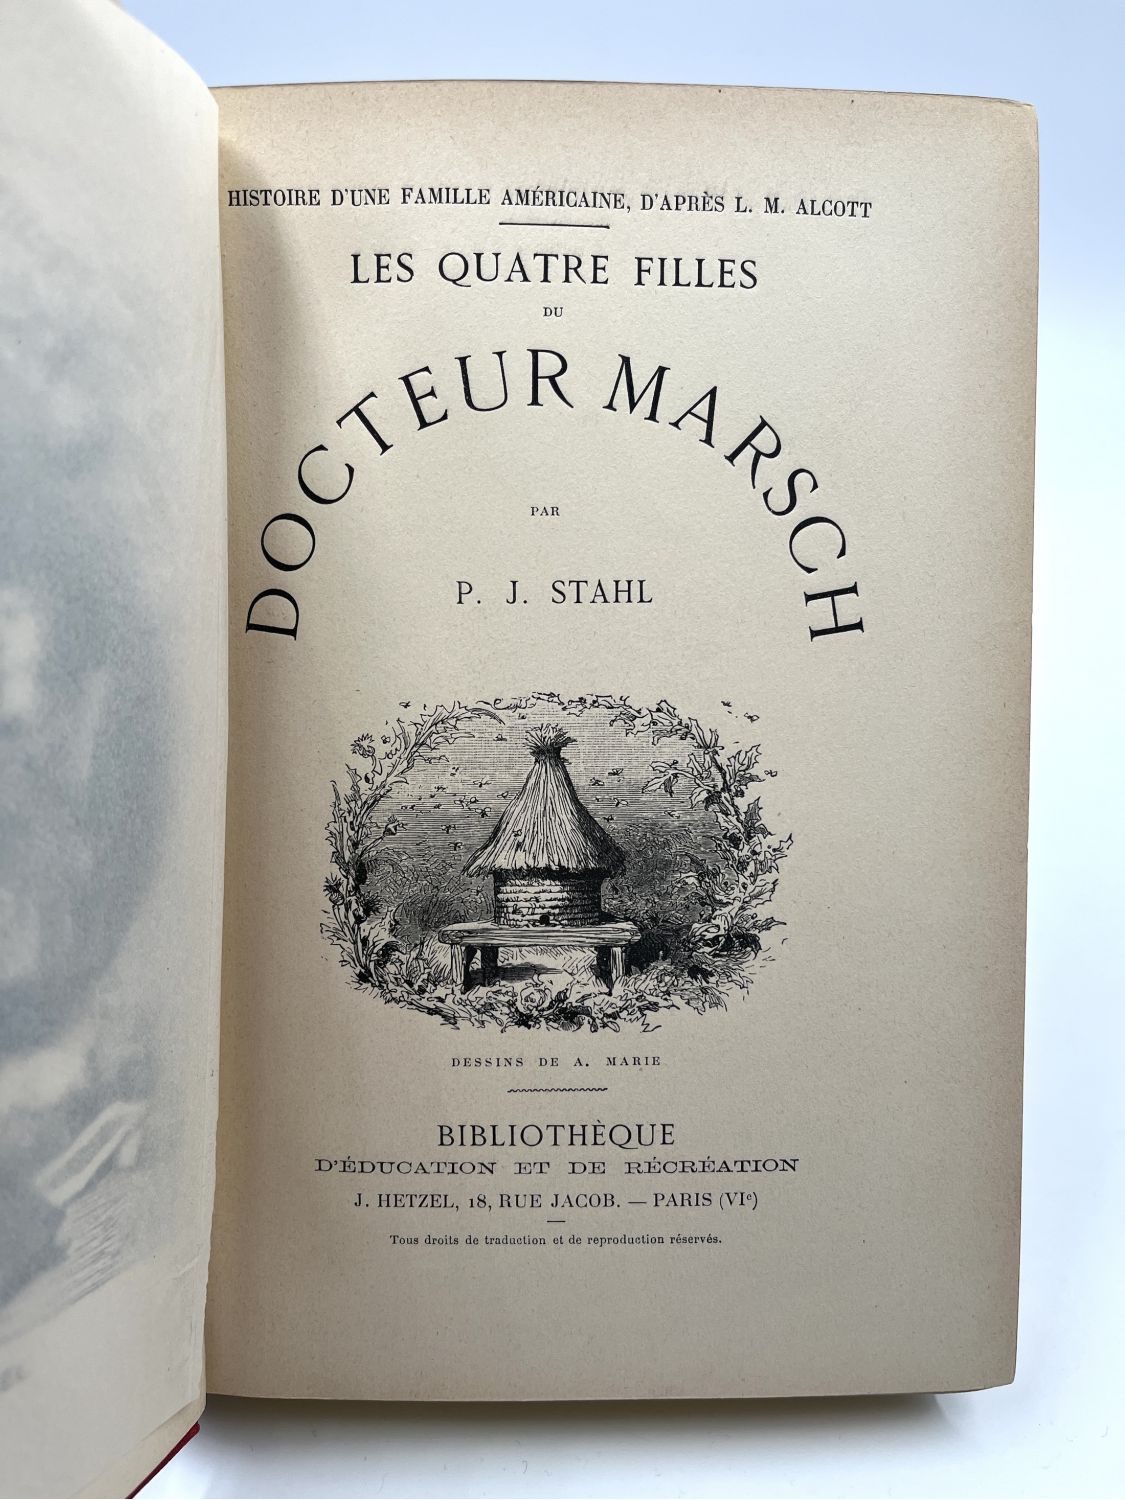 Les Quatre Filles du docteur March Tome 4. La de Louisa May Alcott -  Poche - Livre - Decitre